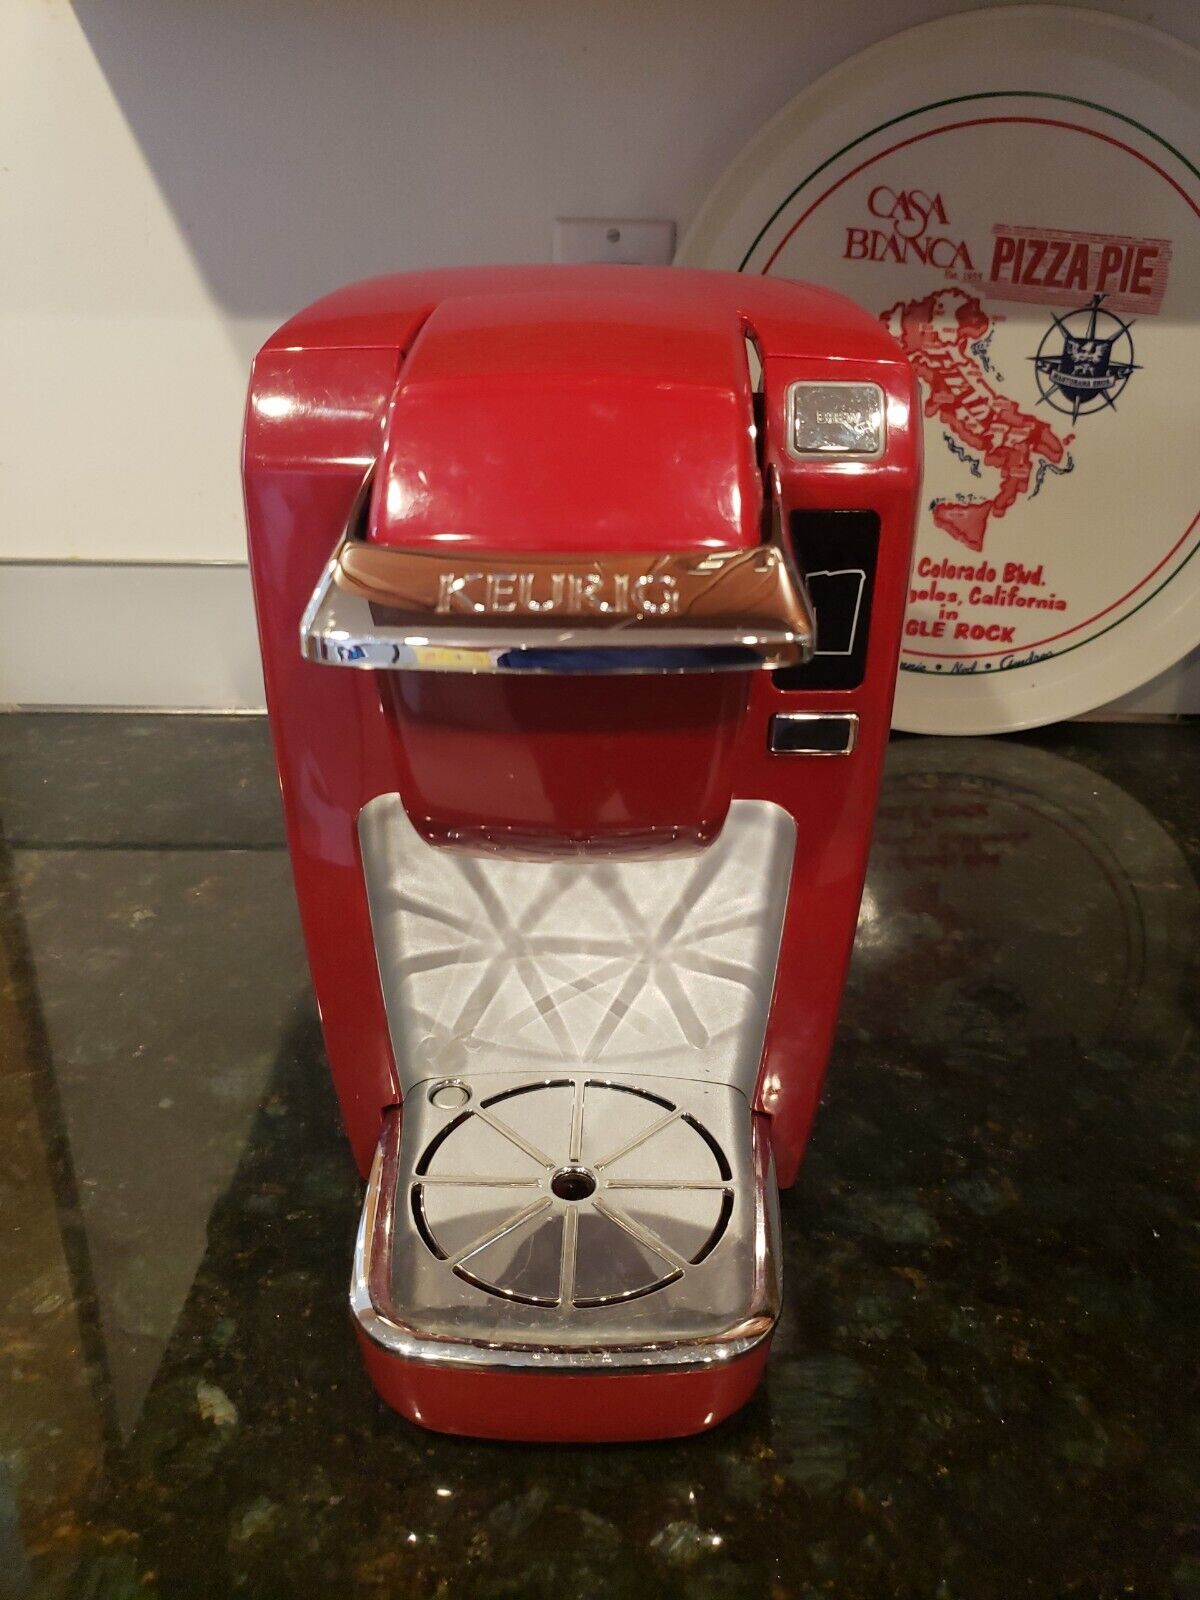 Keurig Model K10 Household Single Serve Coffee Maker Brewing System - Red